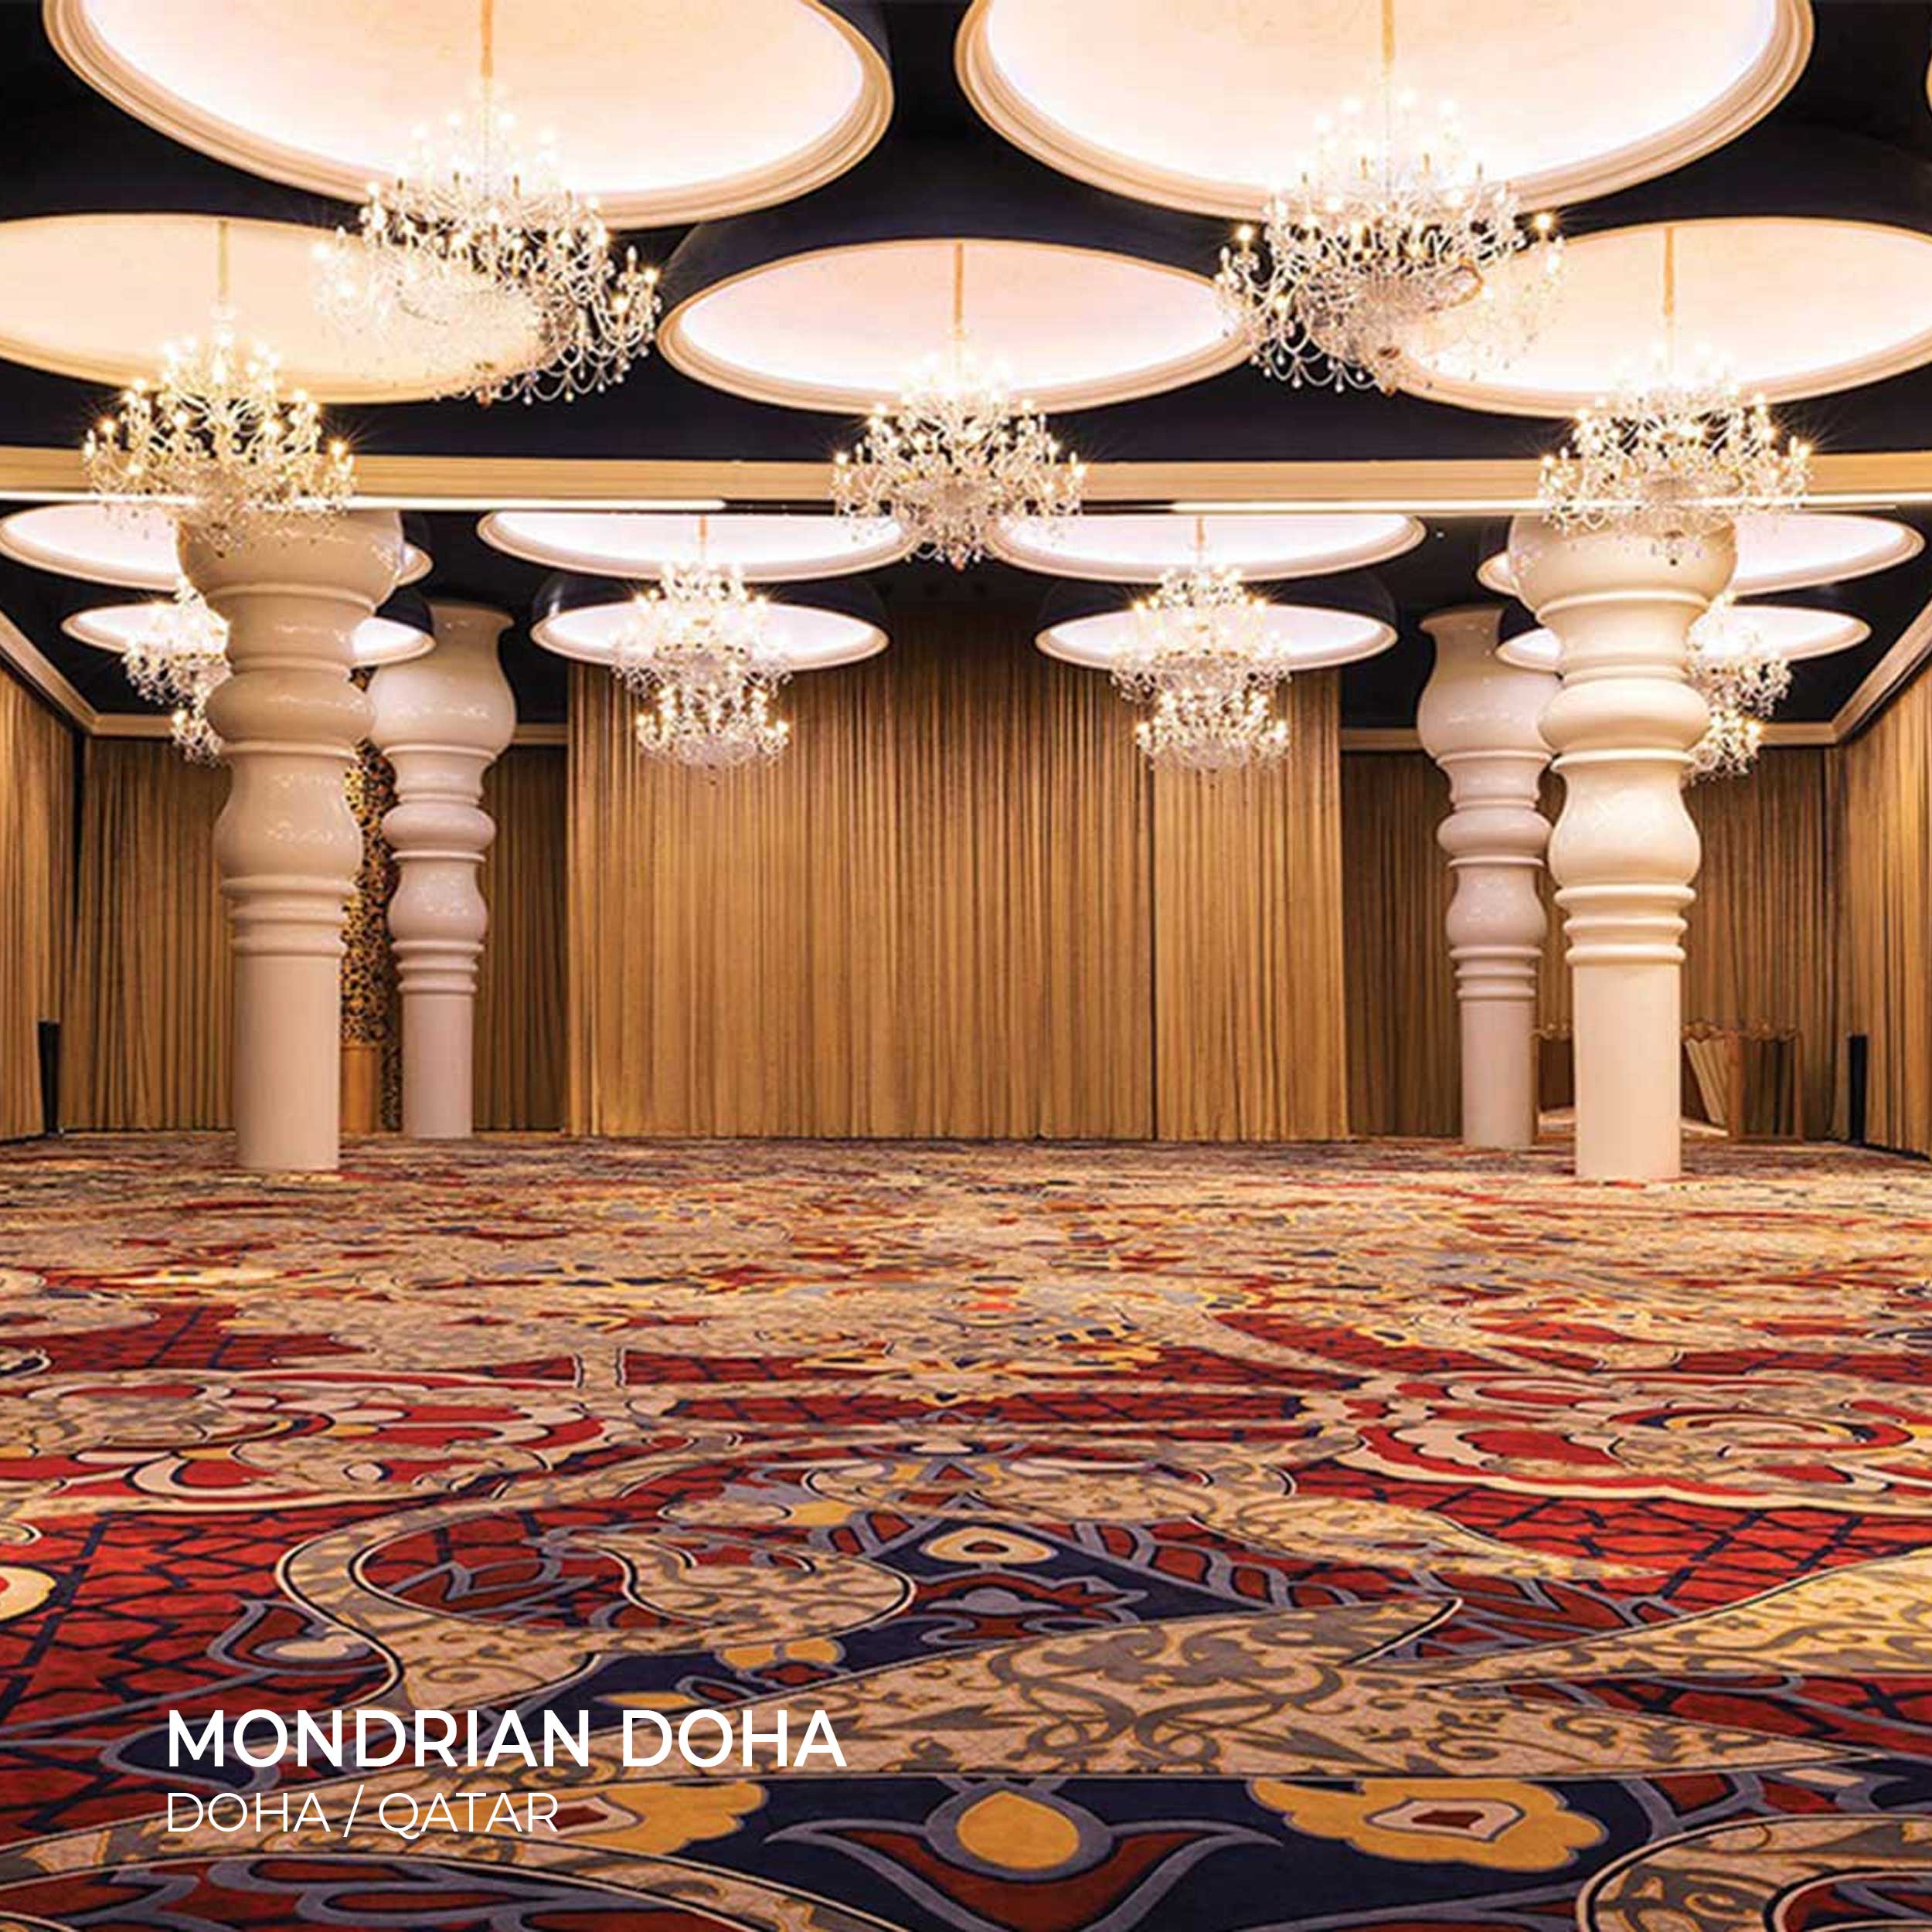 Sia Moore - Mondrian Doha